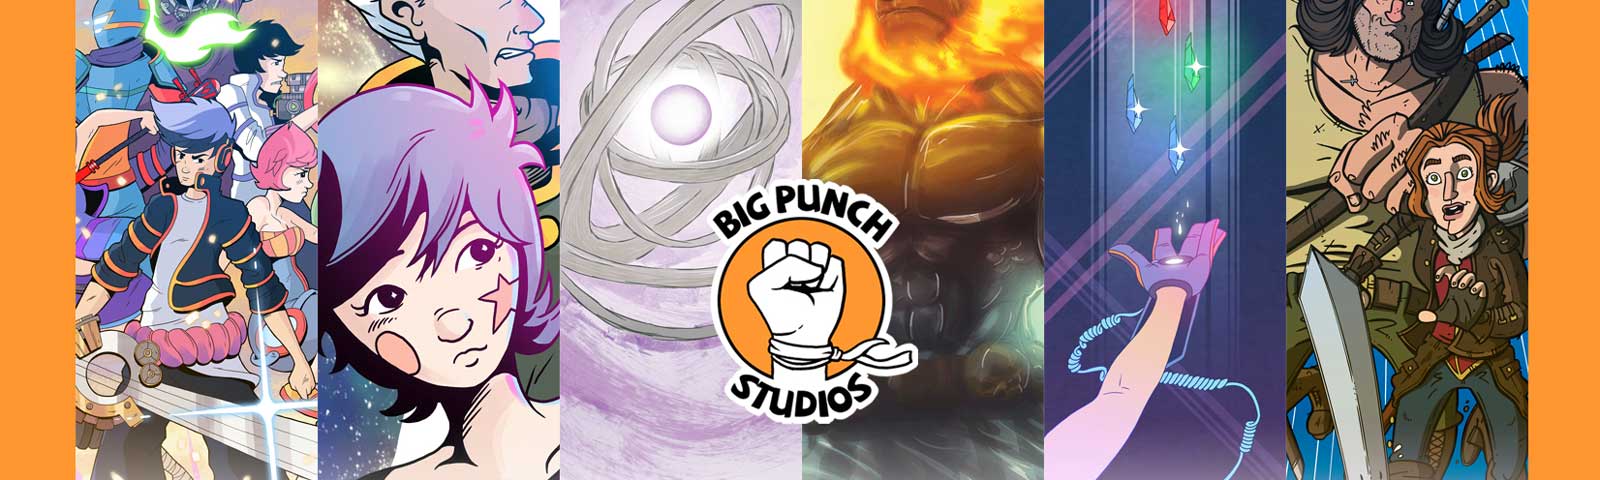 Big Punch Studios Banner